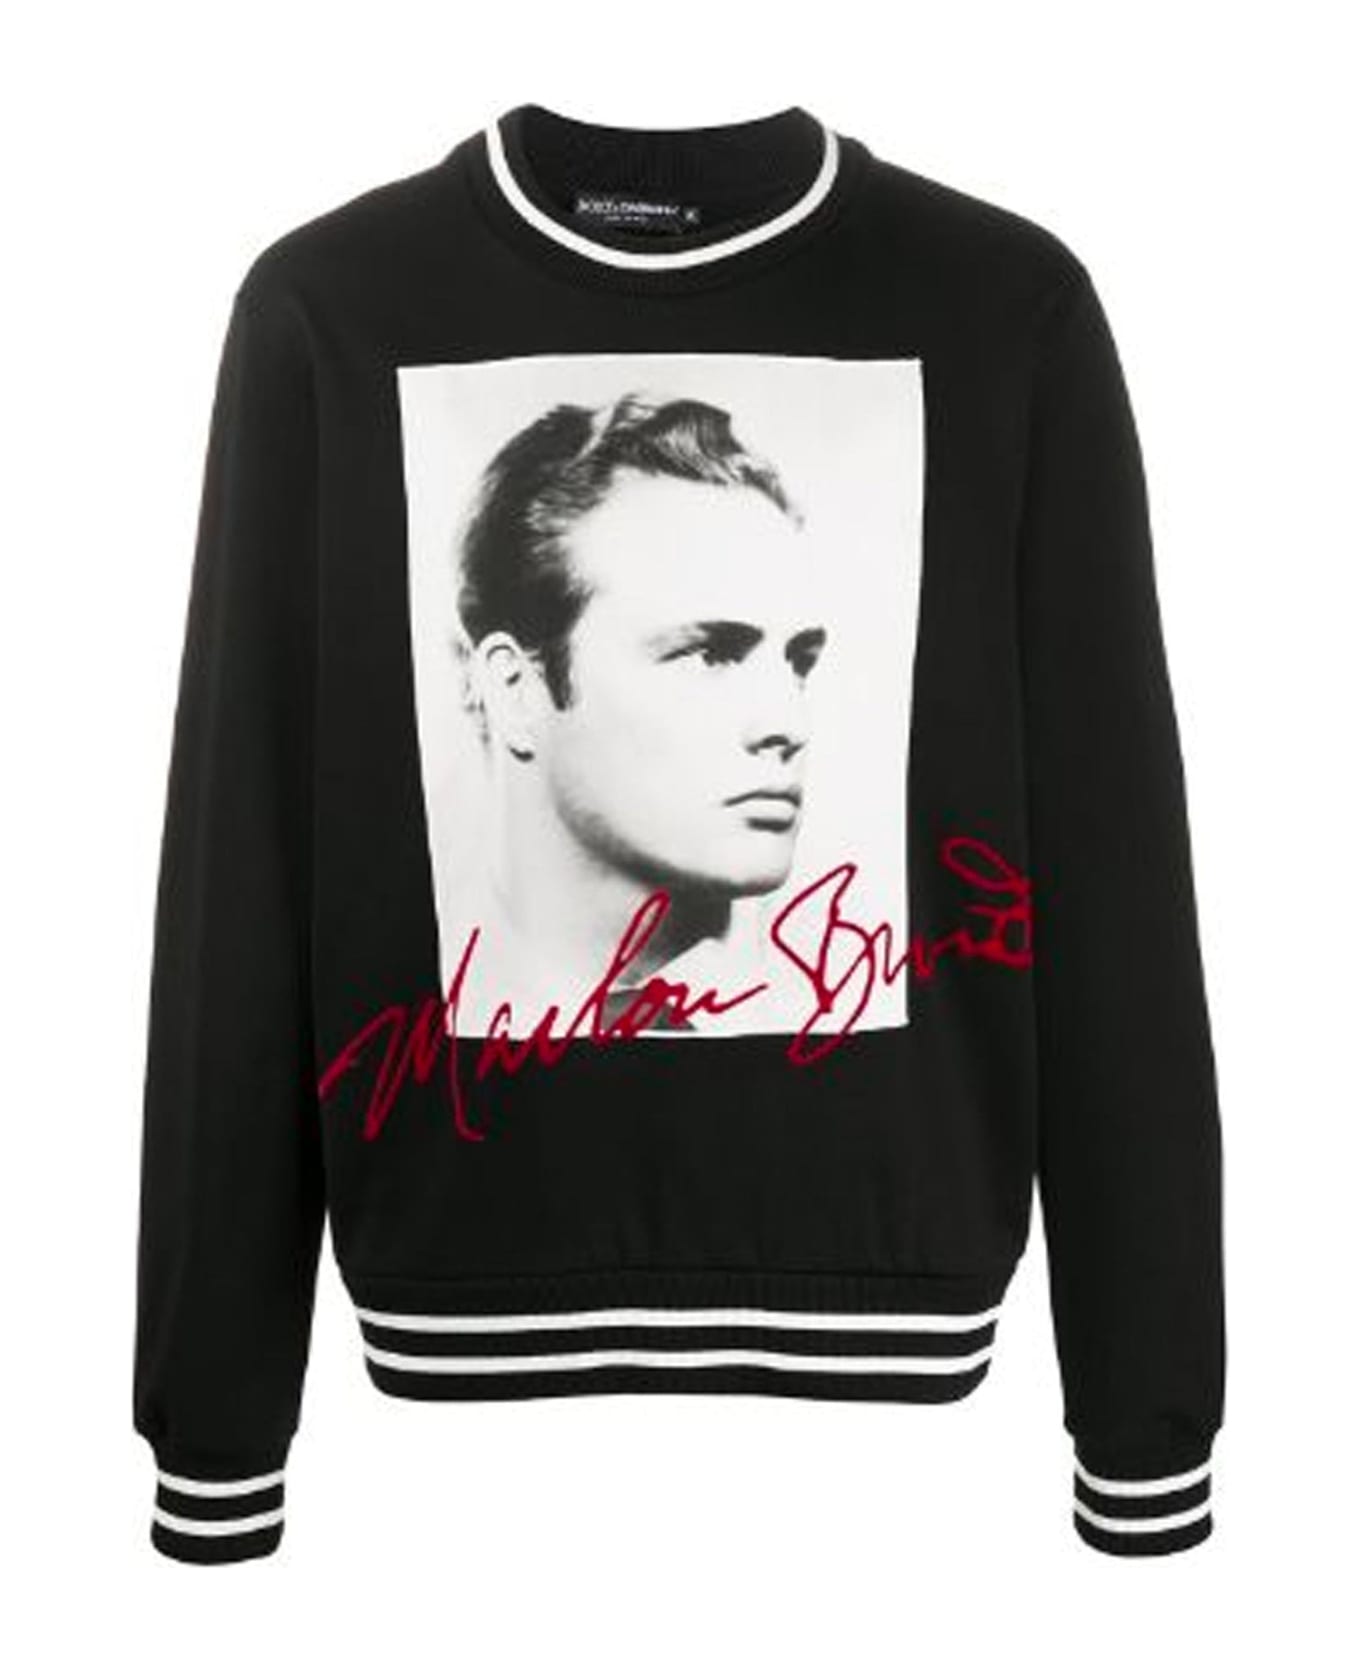 Dolce & Gabbana Marlon Brando Sweatshirt - Black